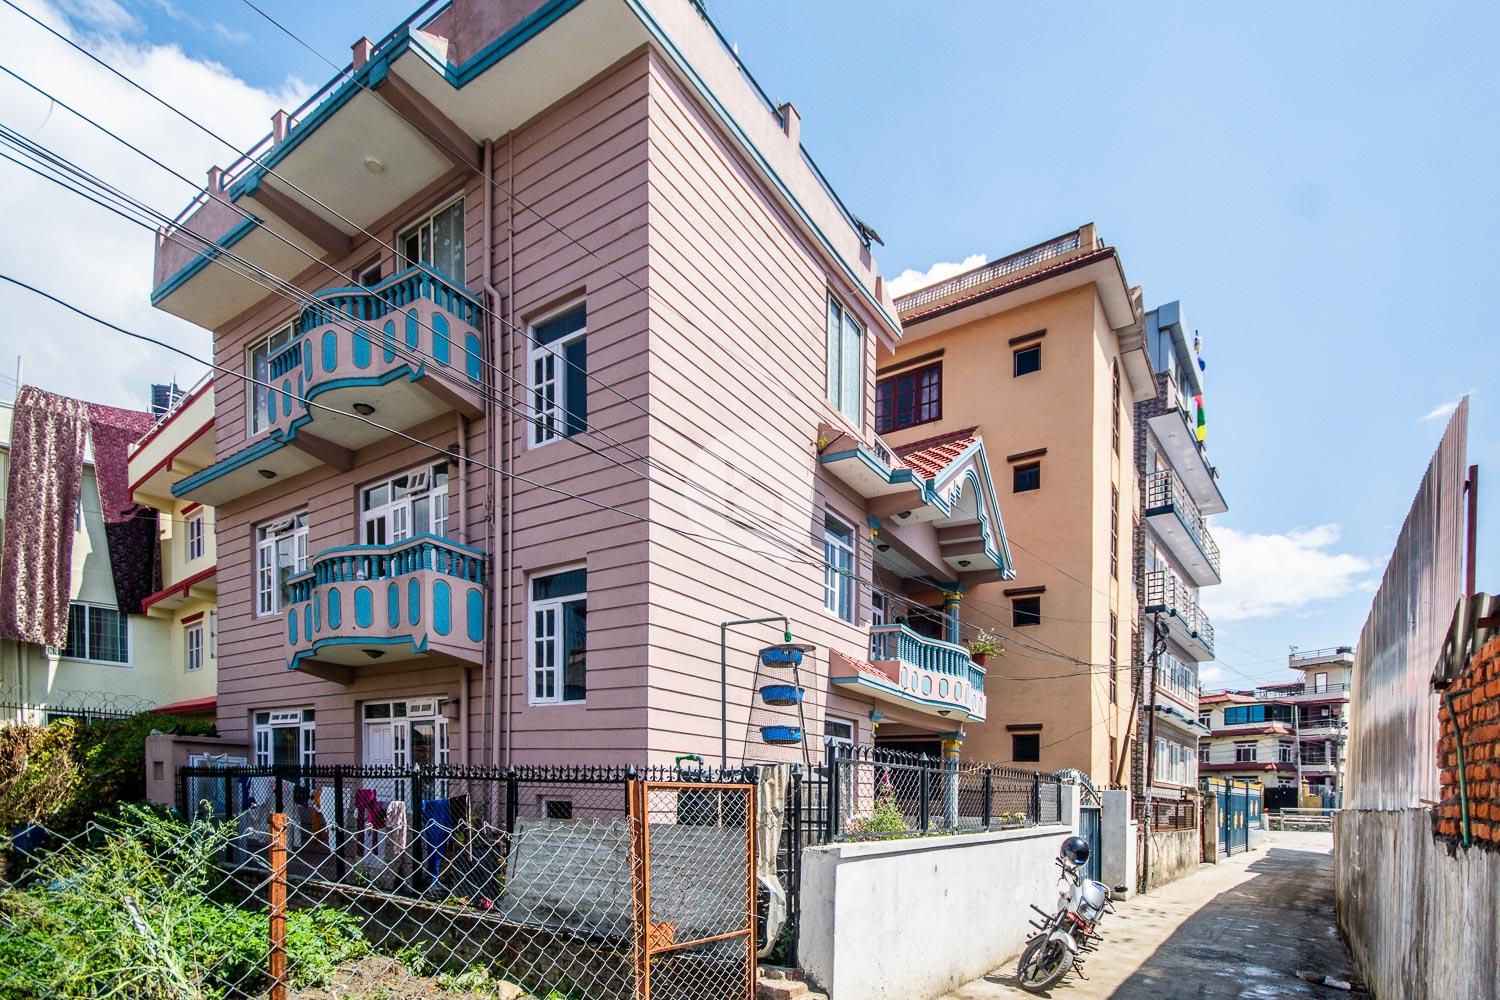 Residential House sale : House for Sale in Sukedhara, Kathmandu Image 3